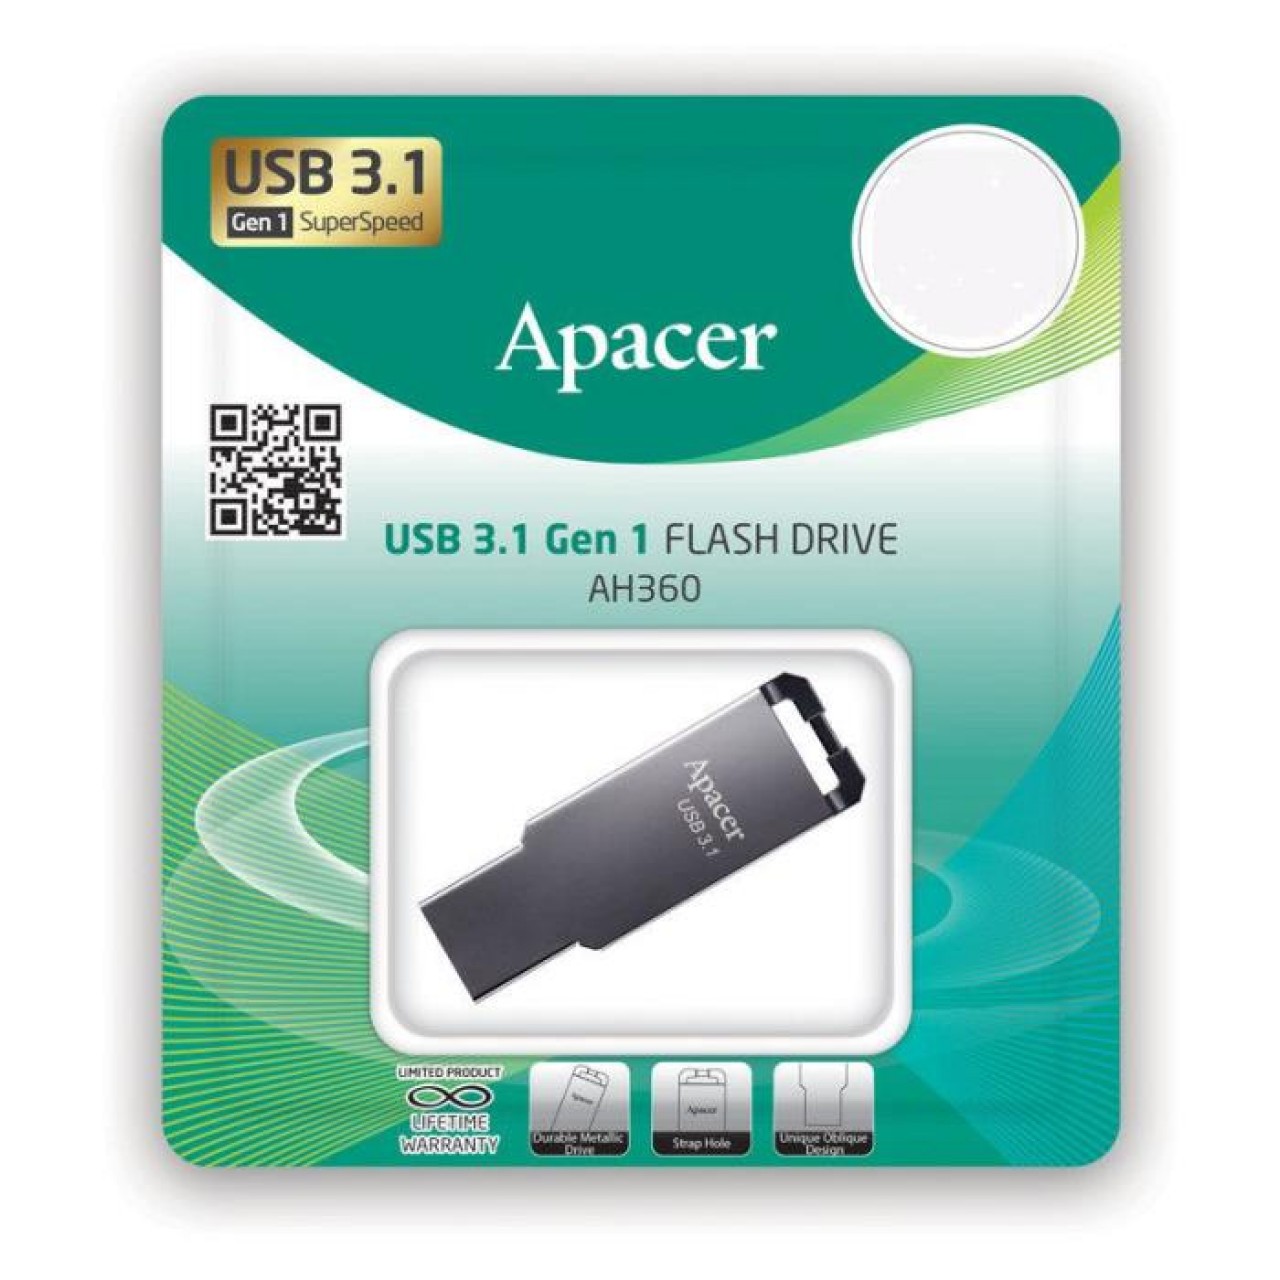 Usb 3.2 Gen1 Flash Drive 16GB Apacer AH360 Ashy RP